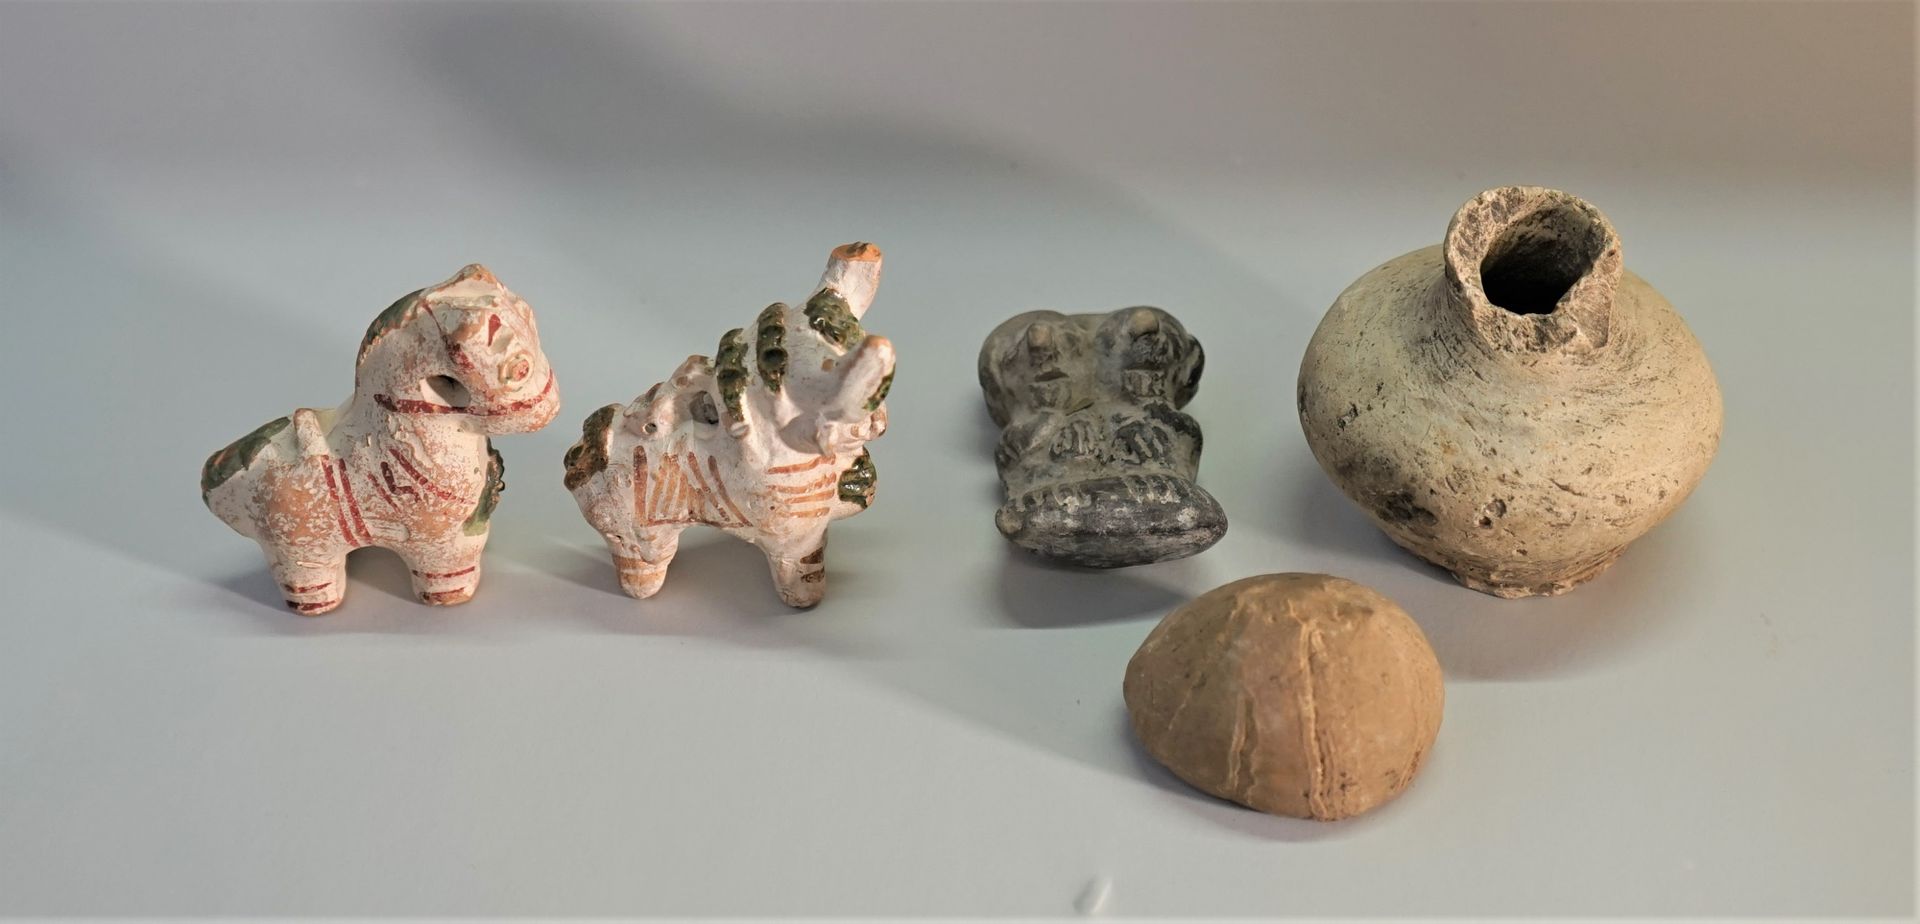 Null 套装包括一匹陶土马和一头牛，两个前哥伦布风格的双胞胎，一个宋式花瓶，一个海胆化石。